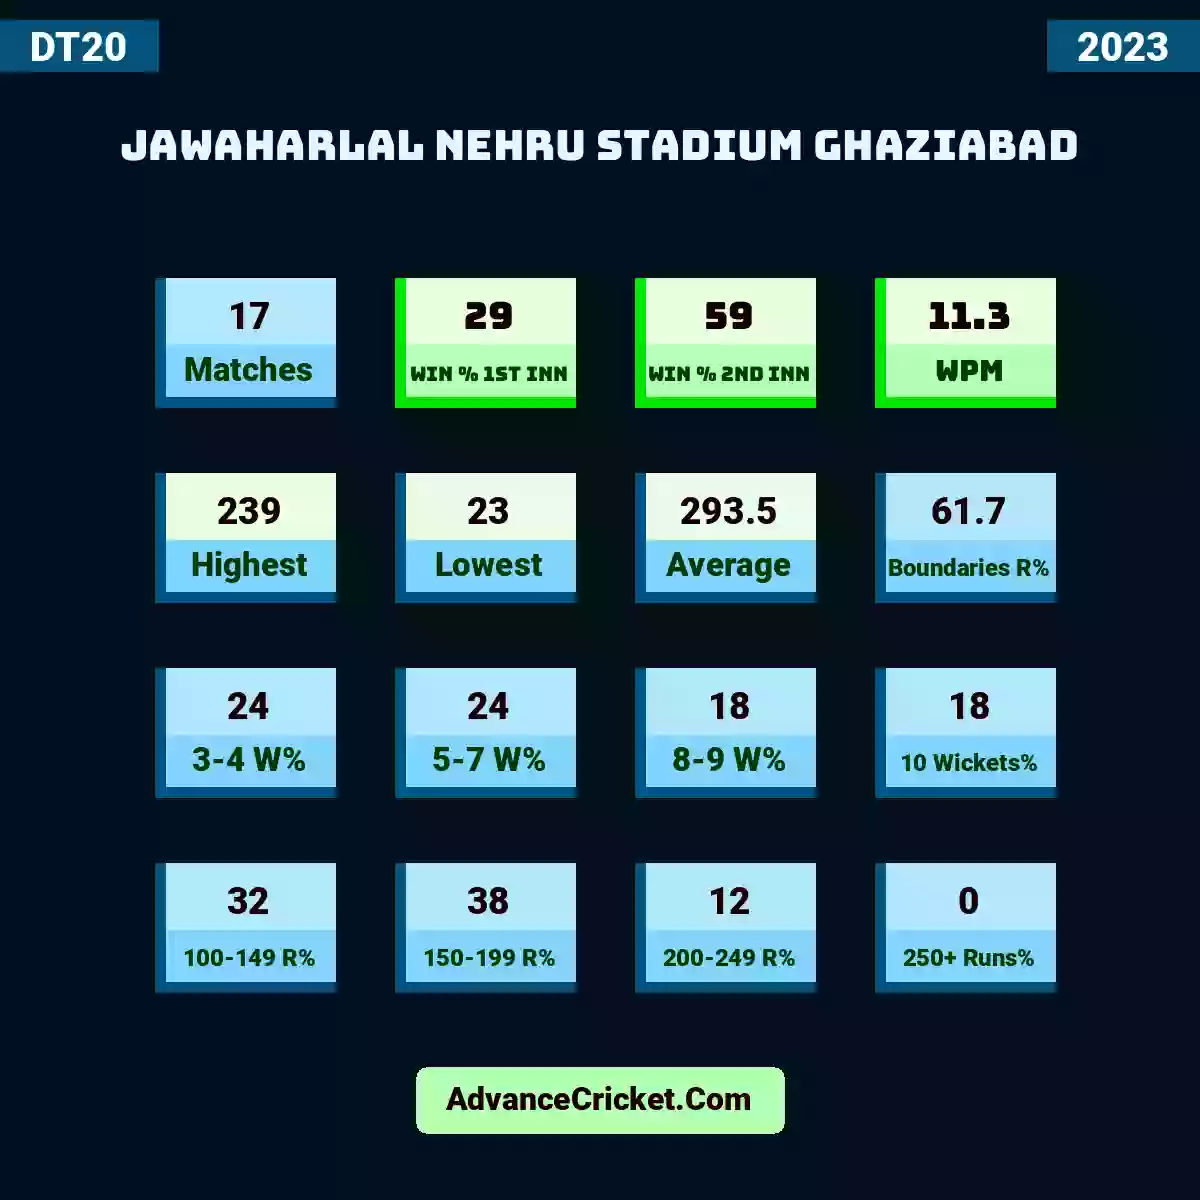 Image showing Jawaharlal Nehru Stadium Ghaziabad with Matches: 17, Win % 1st Inn: 29, Win % 2nd Inn: 59, WPM: 11.3, Highest: 239, Lowest: 23, Average: 293.5, Boundaries R%: 61.7, 3-4 W%: 24, 5-7 W%: 24, 8-9 W%: 18, 10 Wickets%: 18, 100-149 R%: 32, 150-199 R%: 38, 200-249 R%: 12, 250+ Runs%: 0.